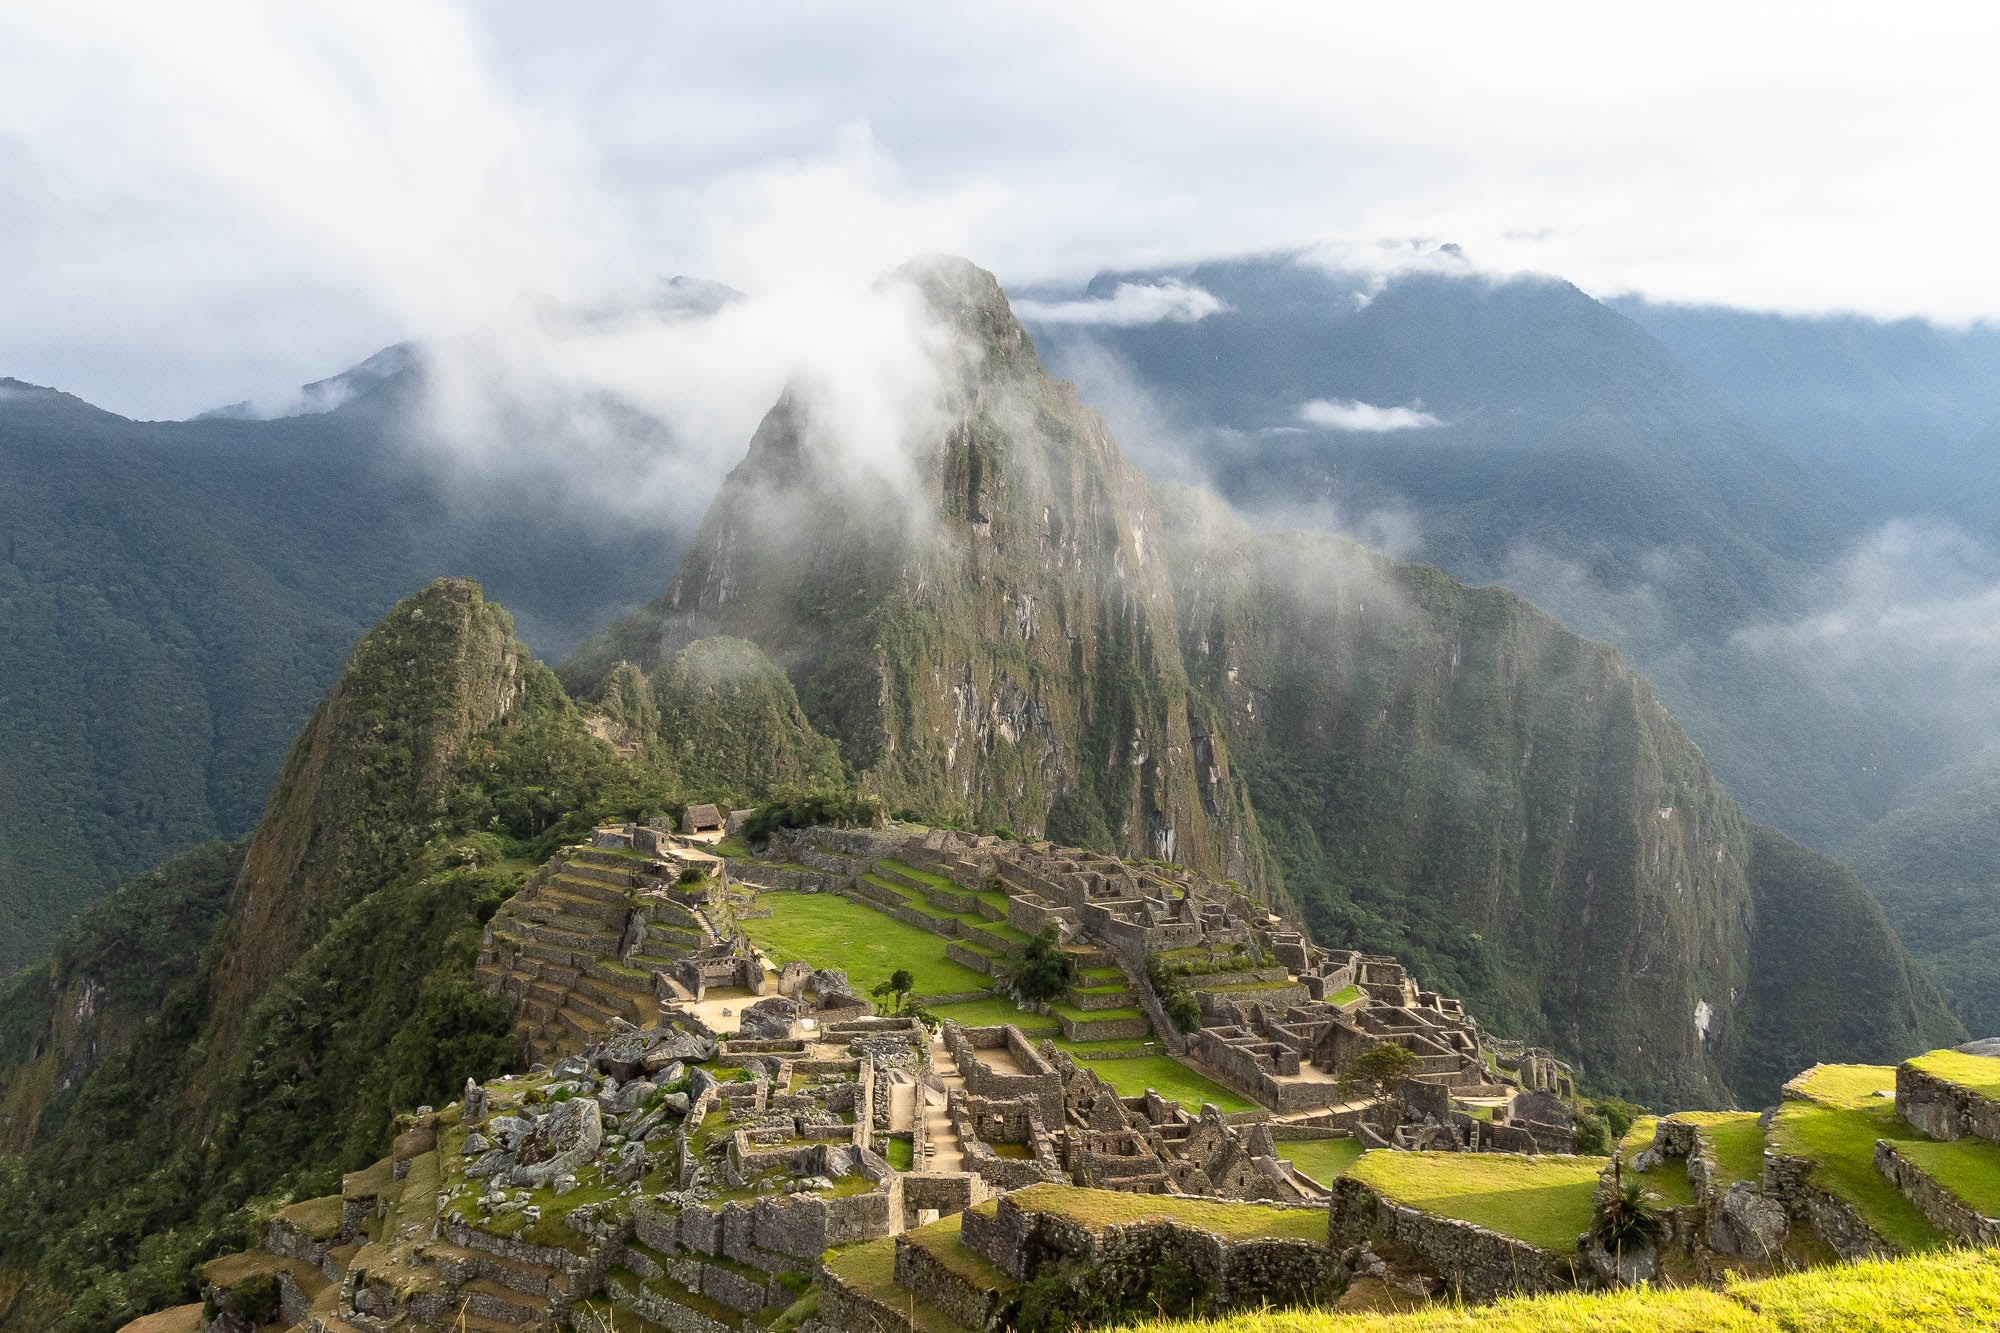 A misty Machu Picchu, Peru’s most famous archaeological site